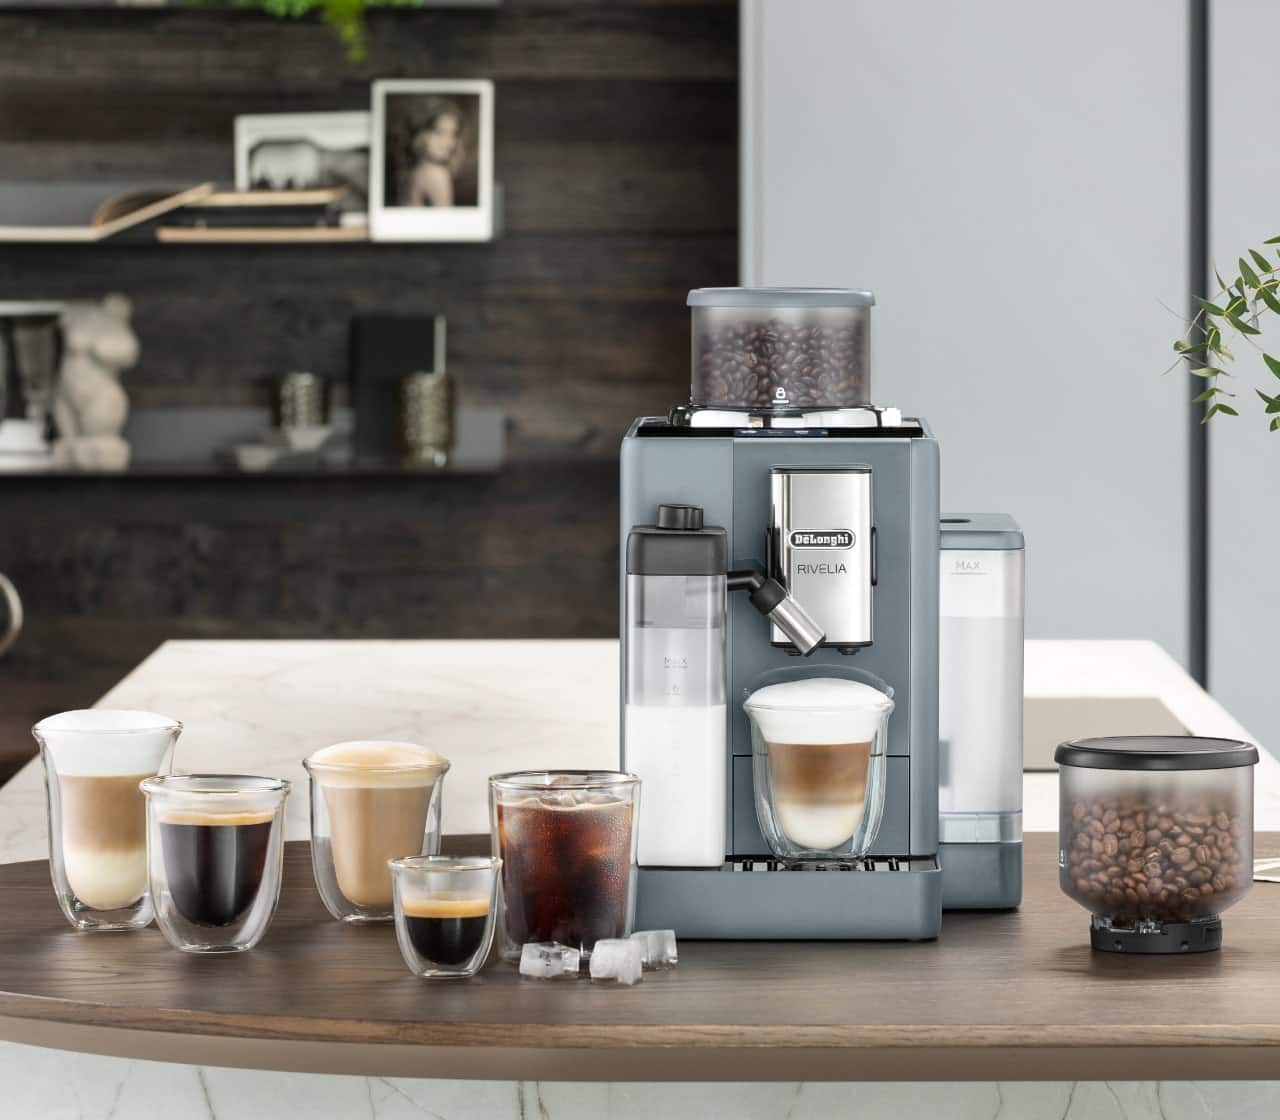 DeLonghi Rivelia bean-to-cup coffee machine review